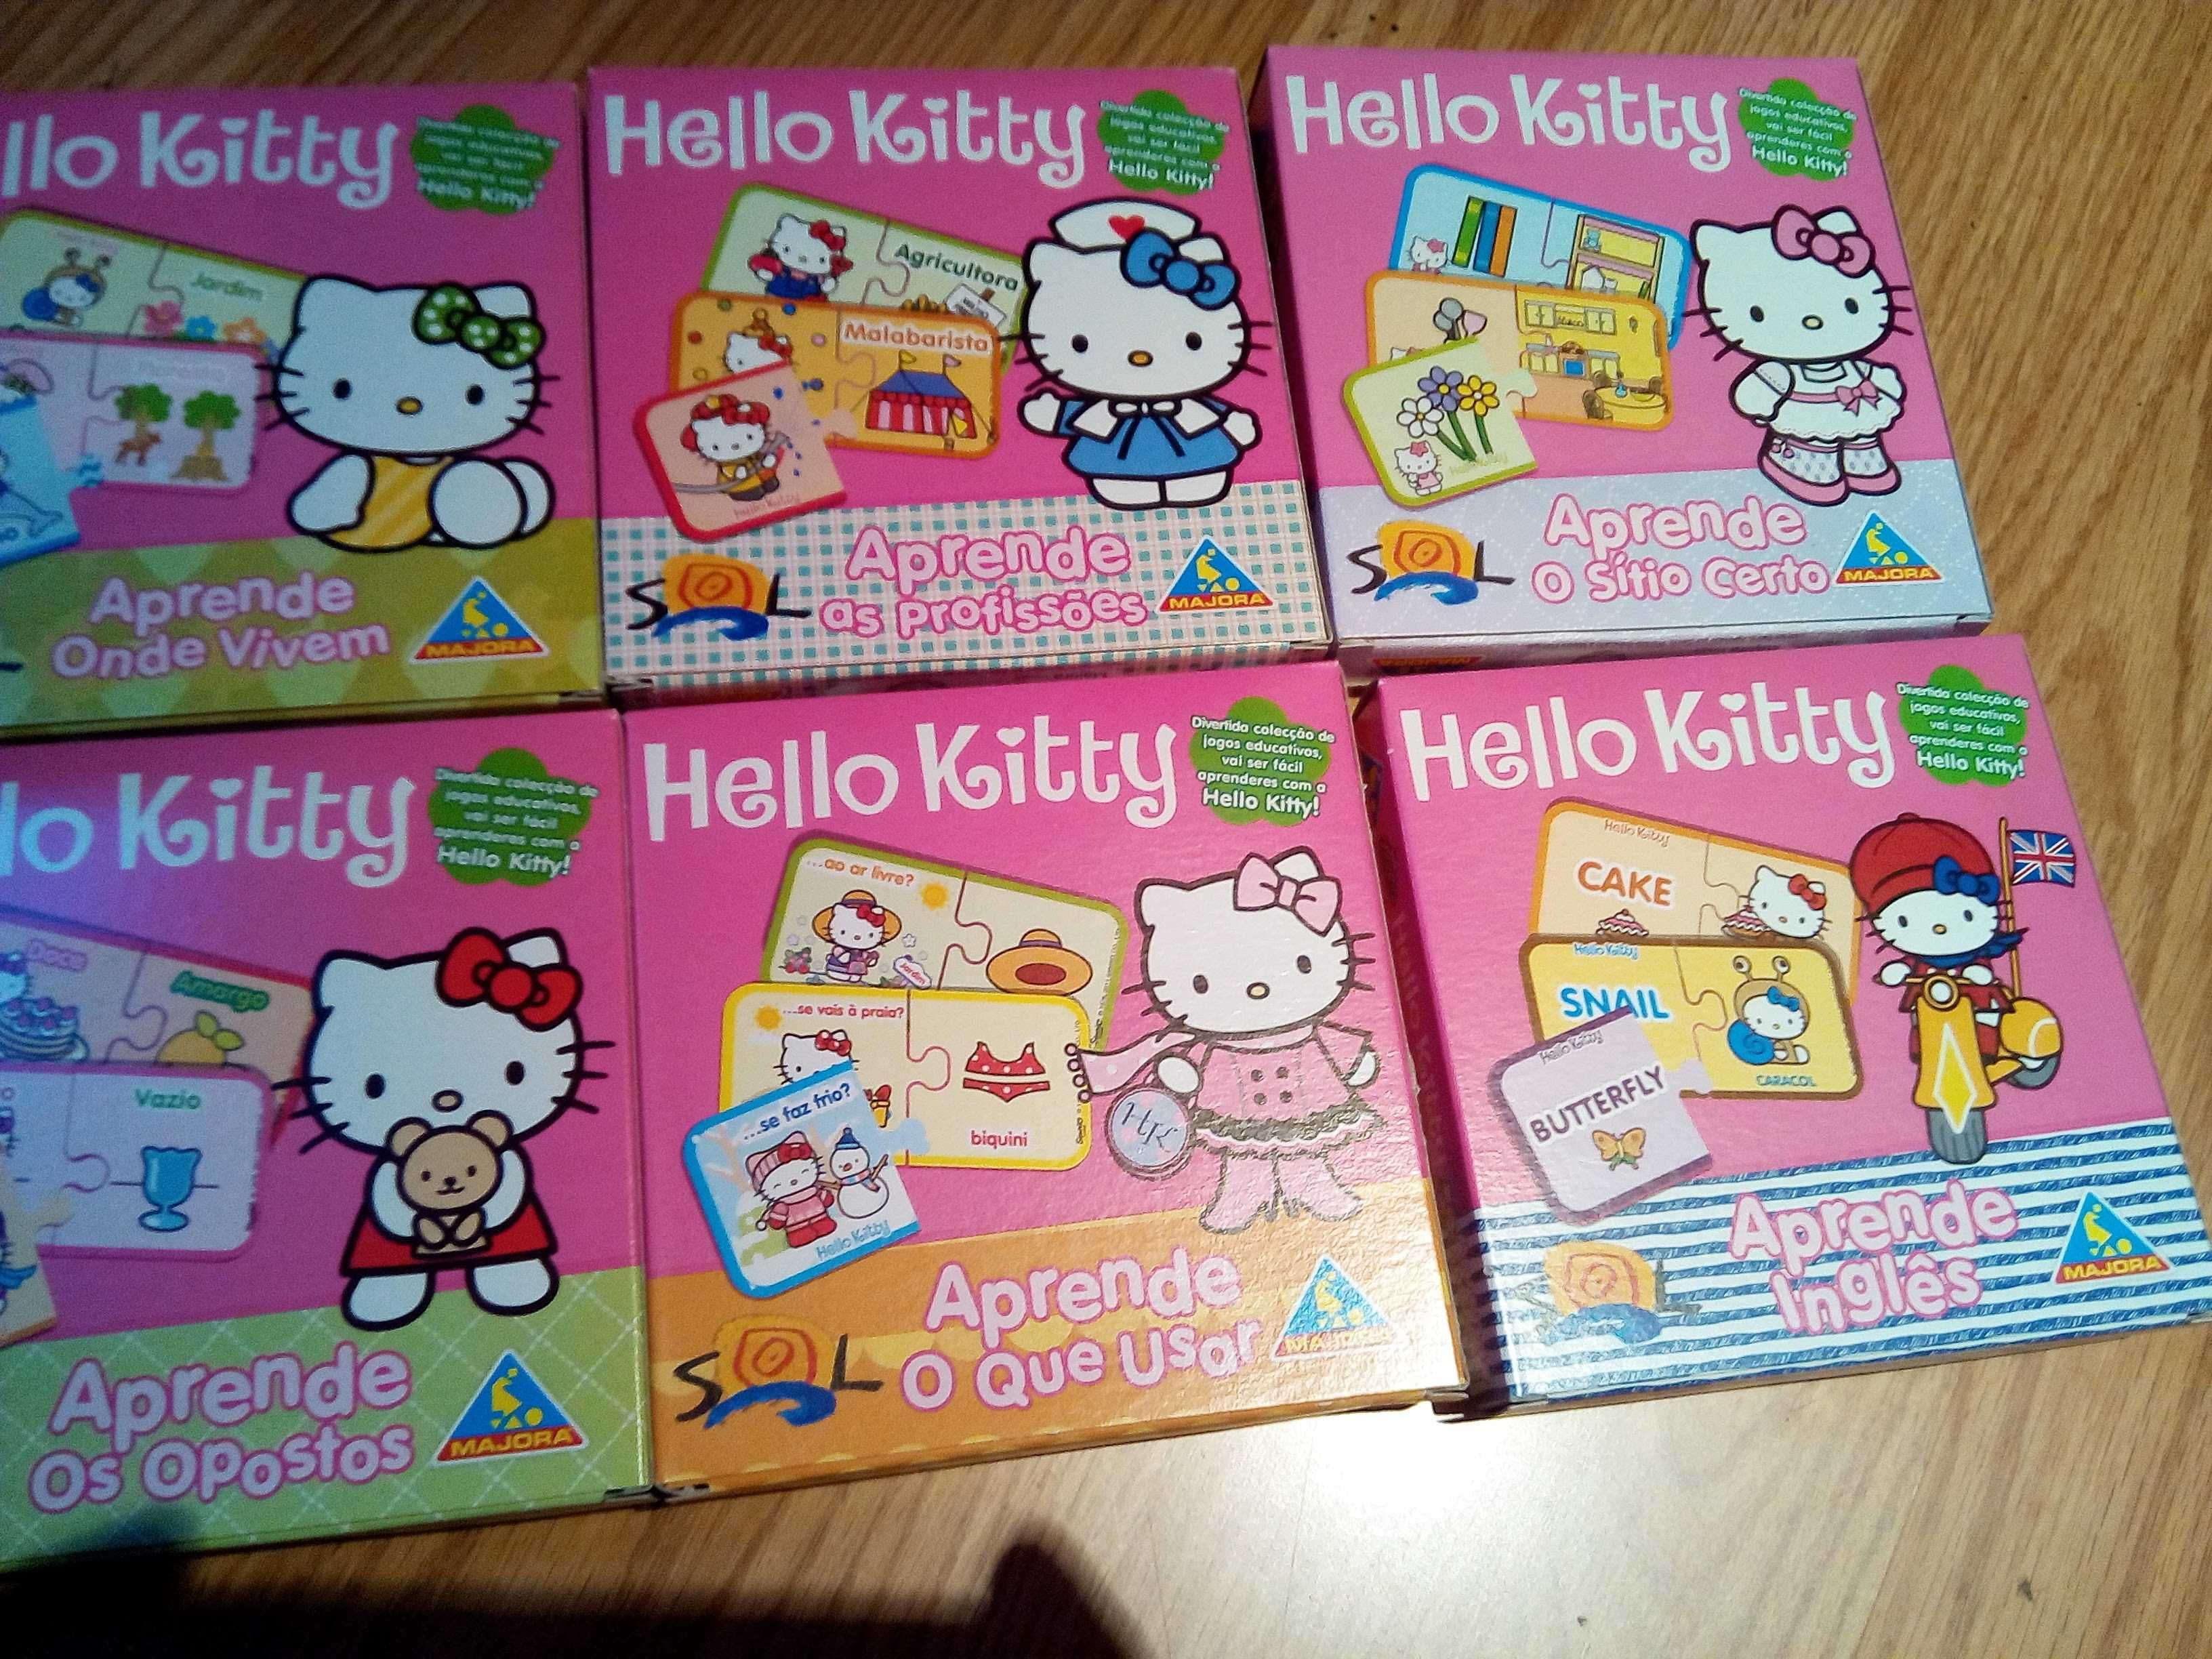 Colecção Educativa Hello Kitty - Puzzles educativos Majora